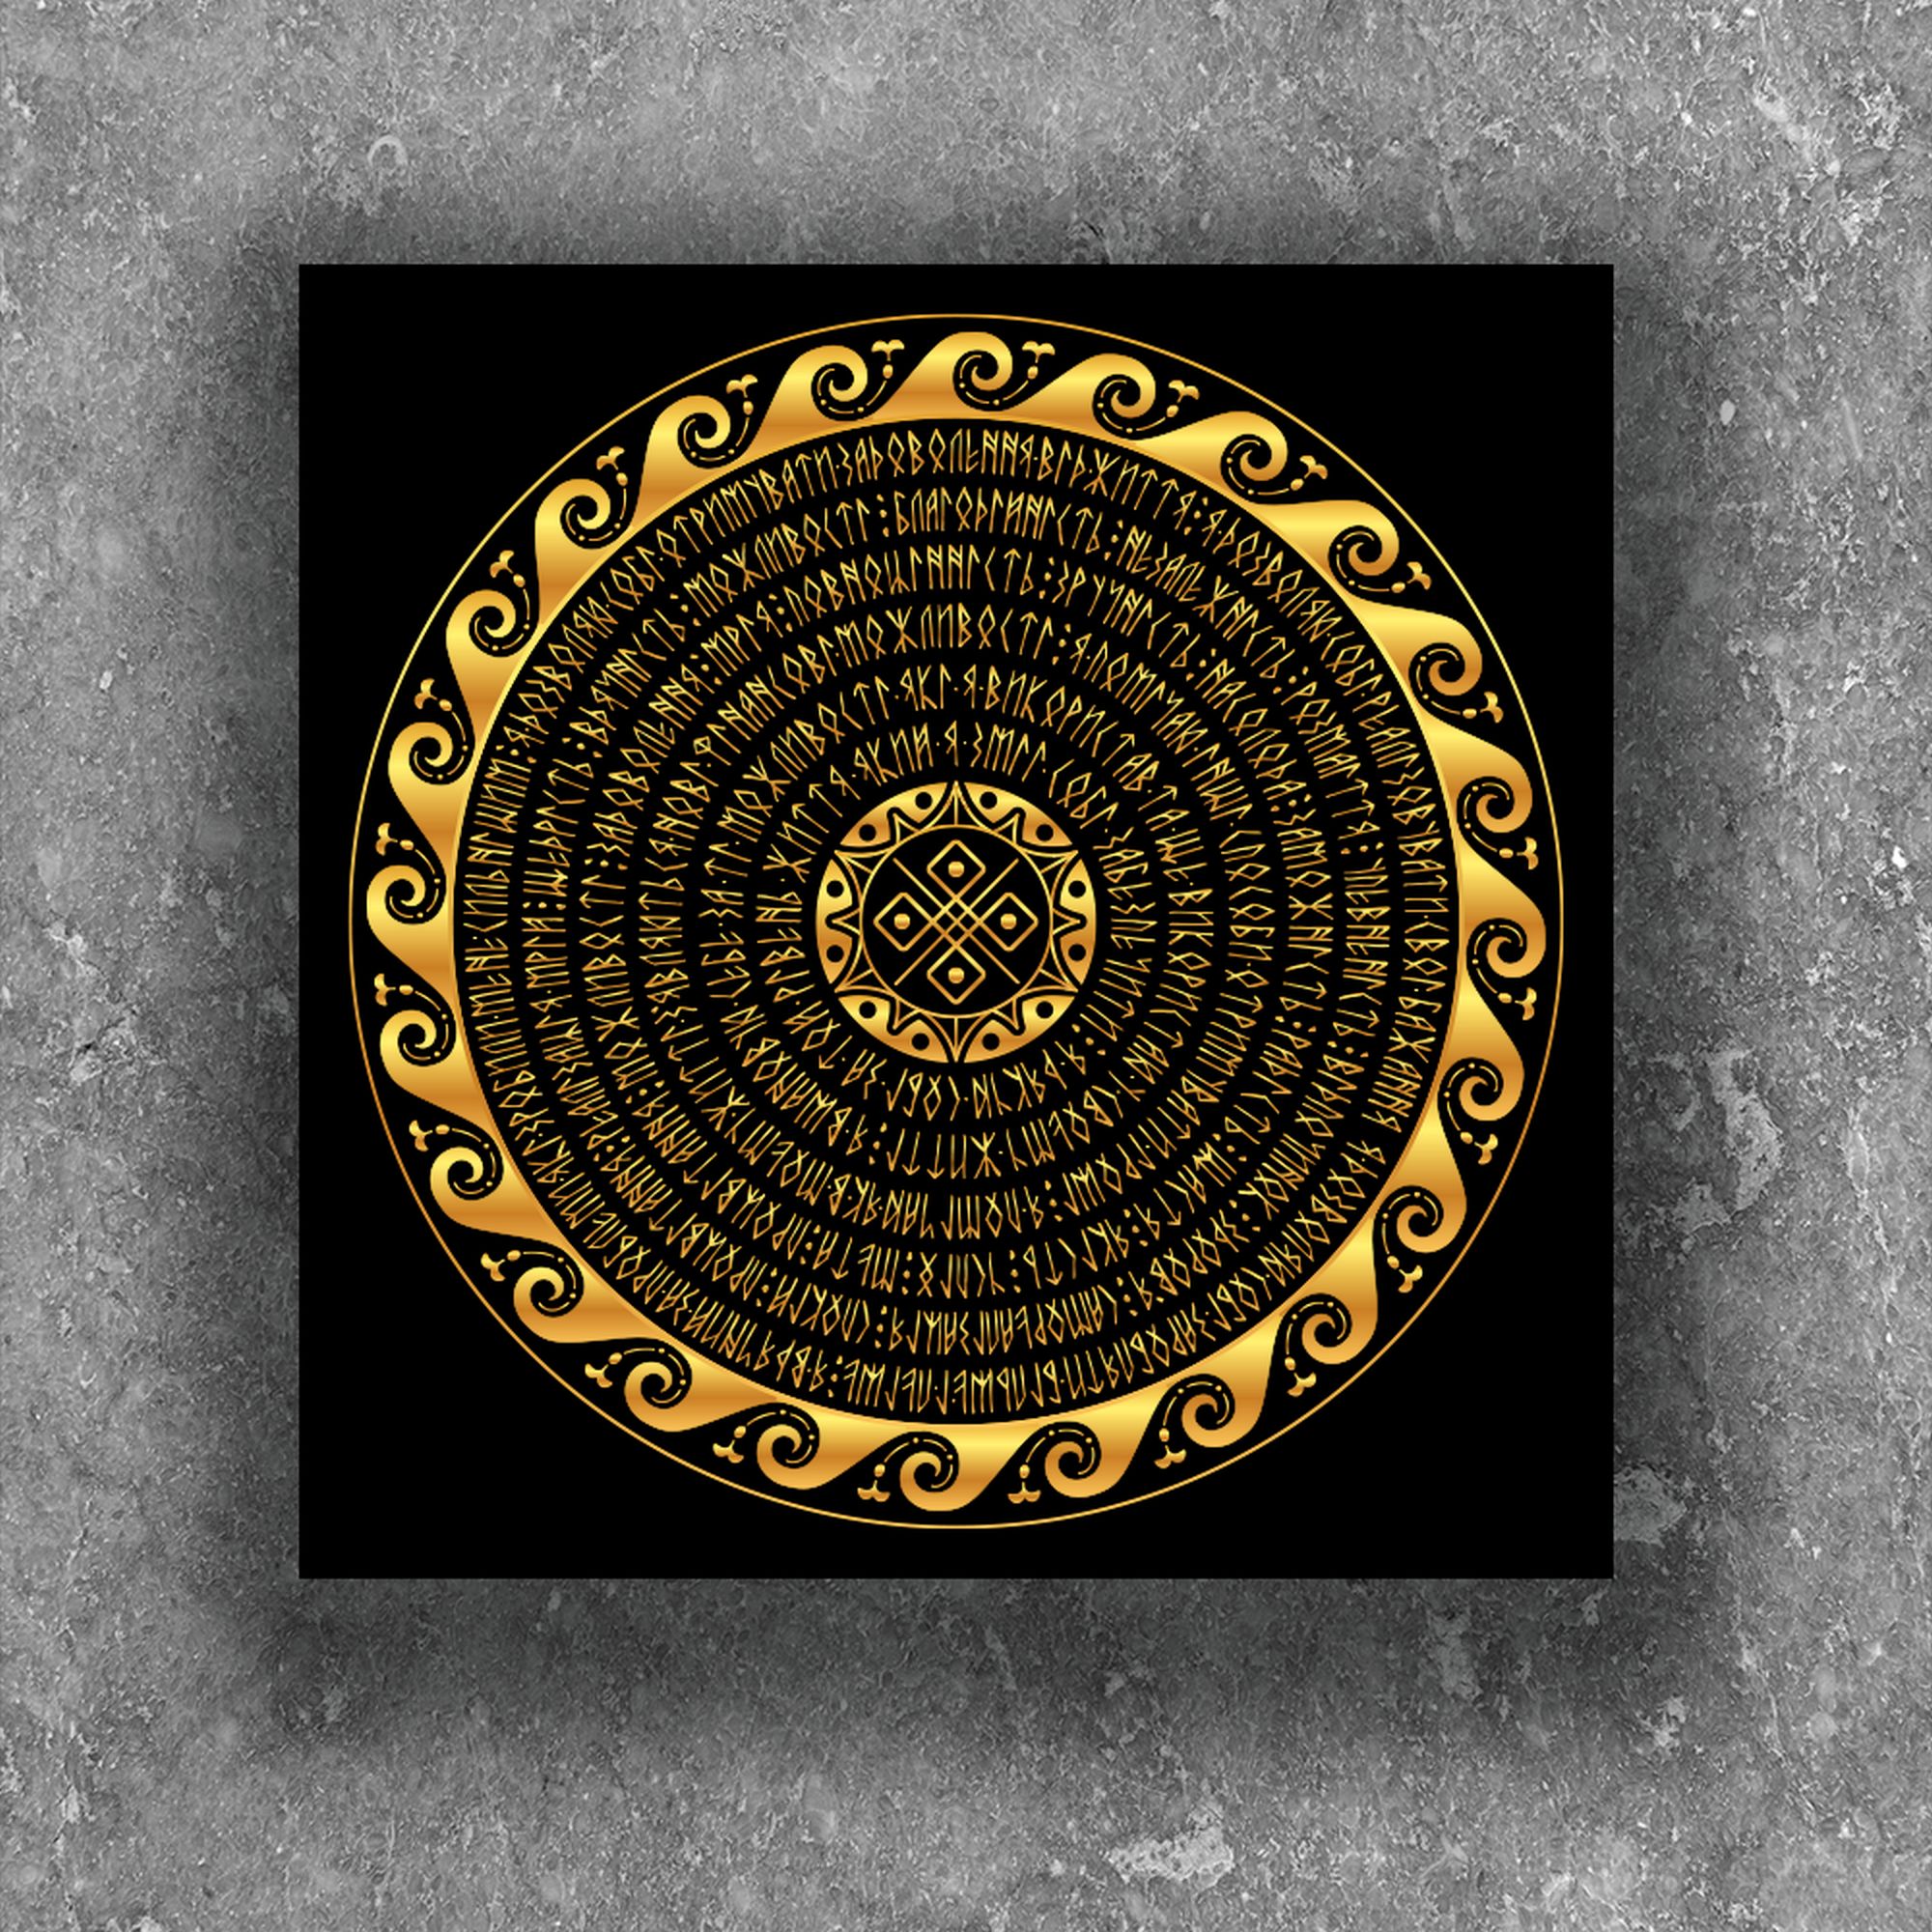 Картина "Деньги" суггестивная мандала размером 40х40 см (1 Mandala (finance))